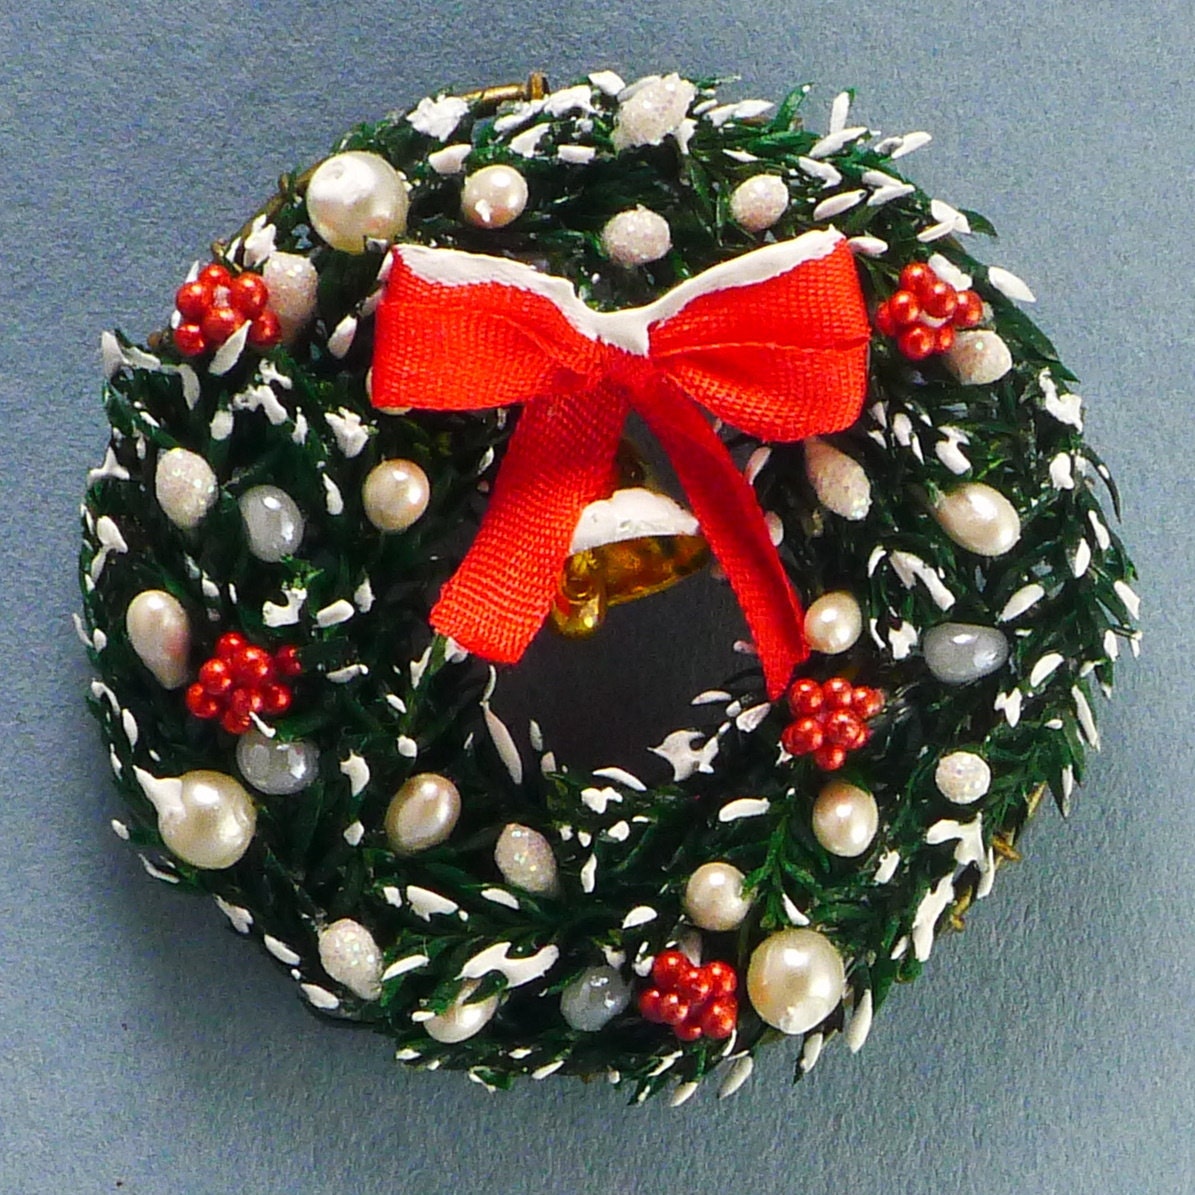 CDHM Artisan Monica Graham, IGMA Artisan of M-M-Minis, 1:12 scale Snowy Bell Christmas Wreath